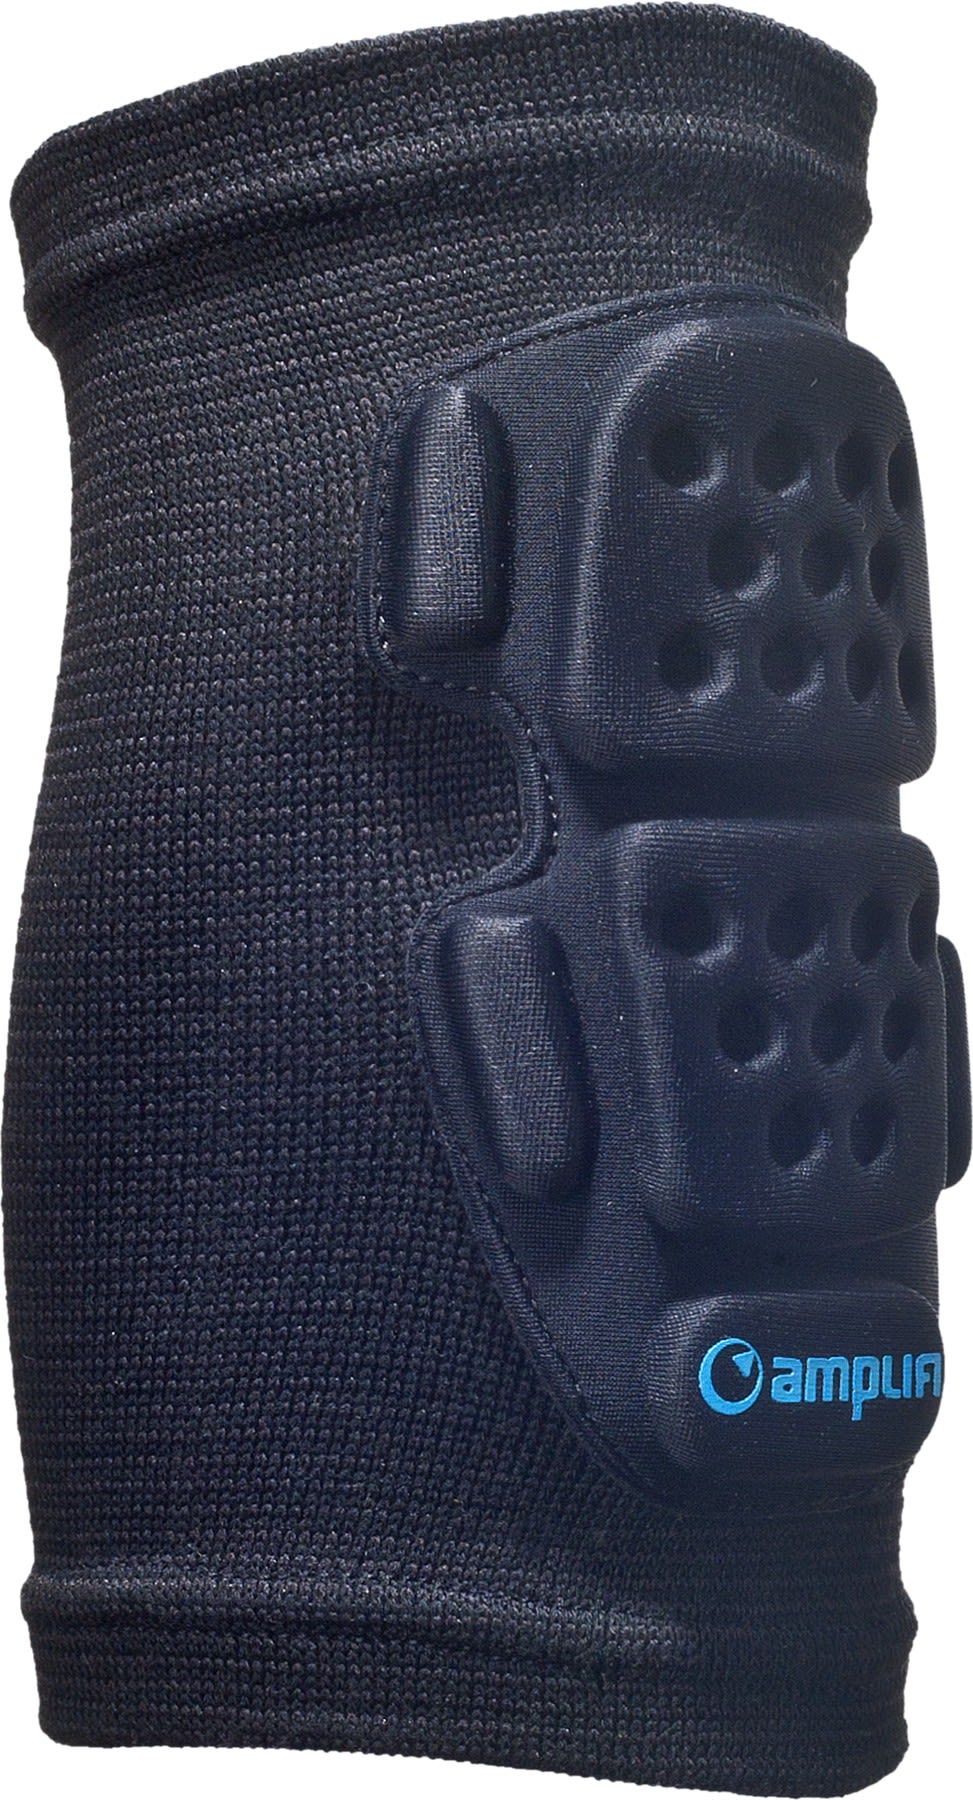 Amplifi Elbow Sleeve Grom Schwarz- Ellenbogenprotektoren- Grsse XS - Farbe Black